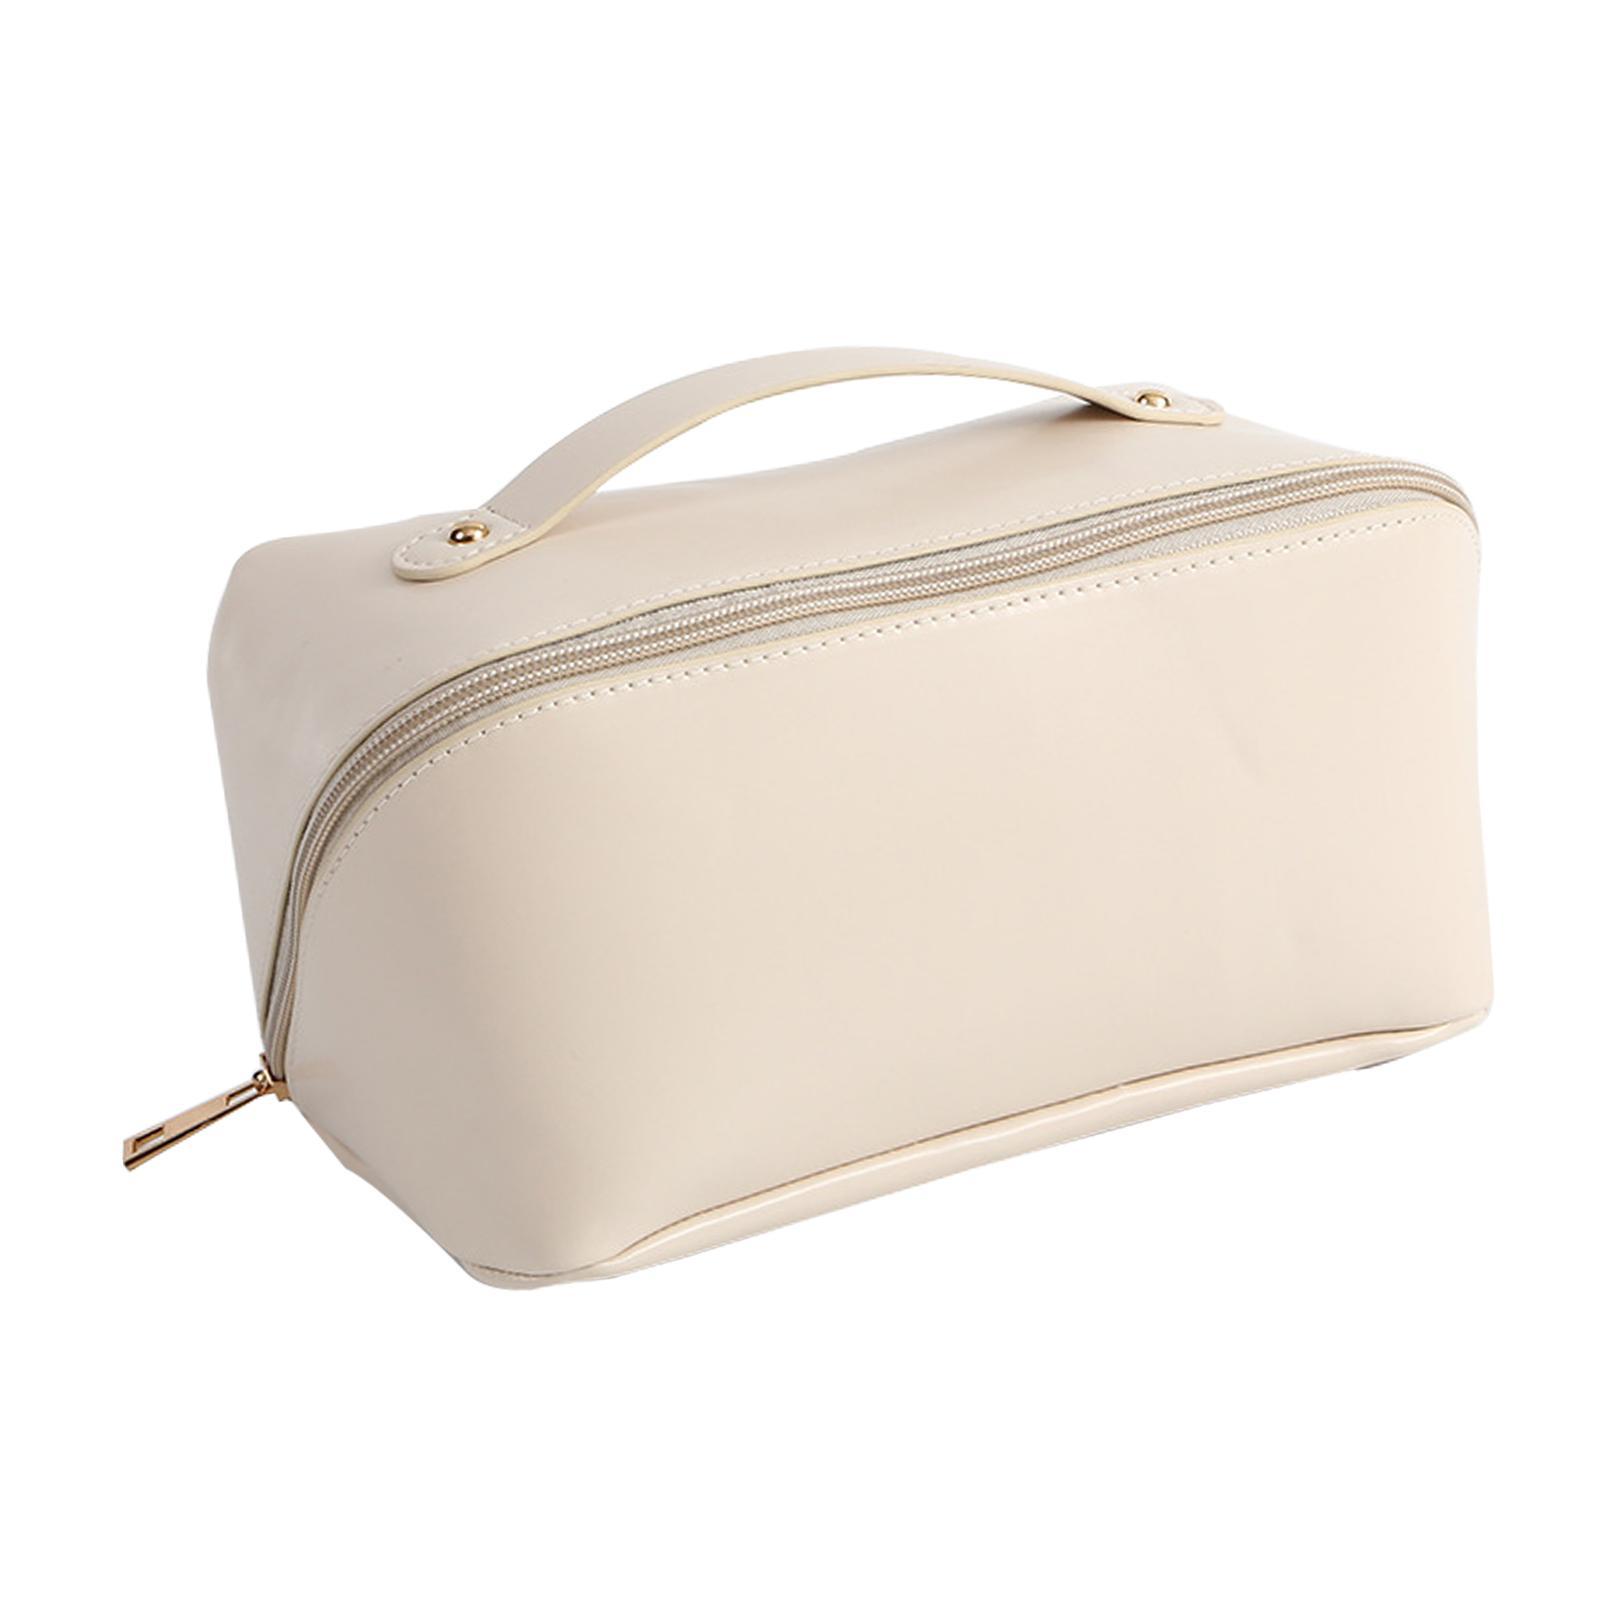 Portable Travel Toiletry Bag PU Leather Handbag Waterproof Women Girls white